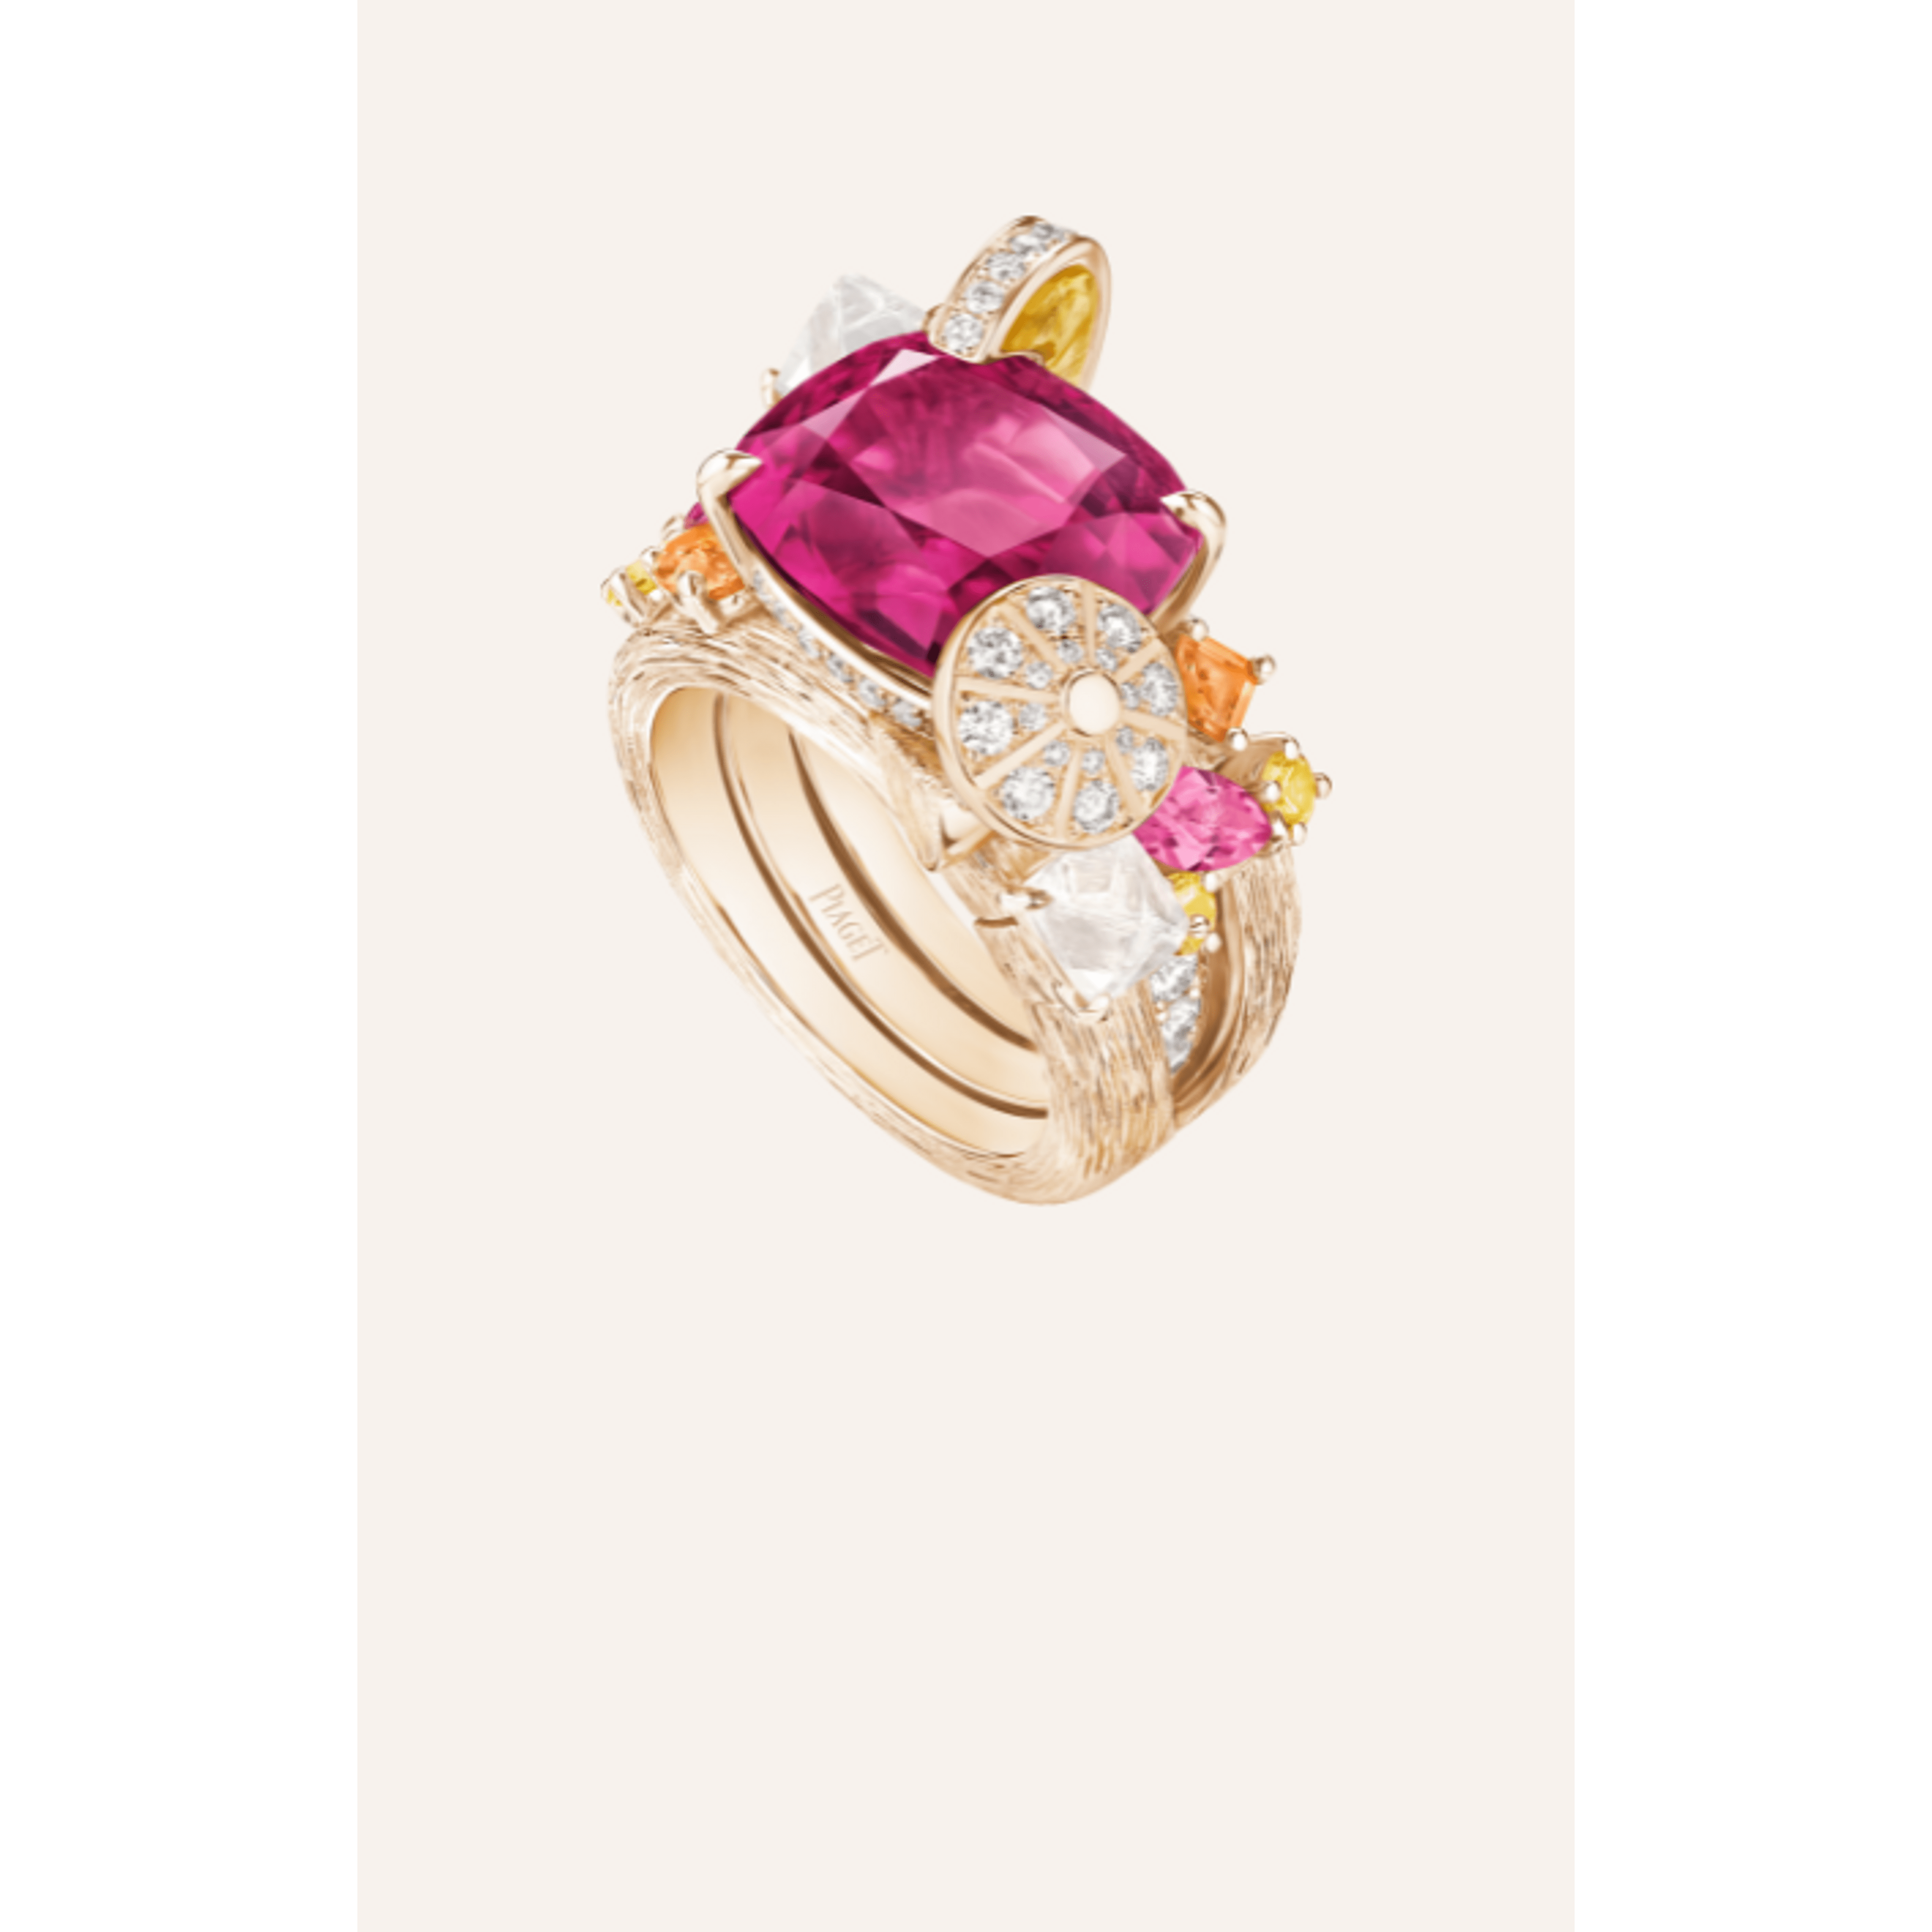 Piaget伯爵高級珠寶鉆石戒指